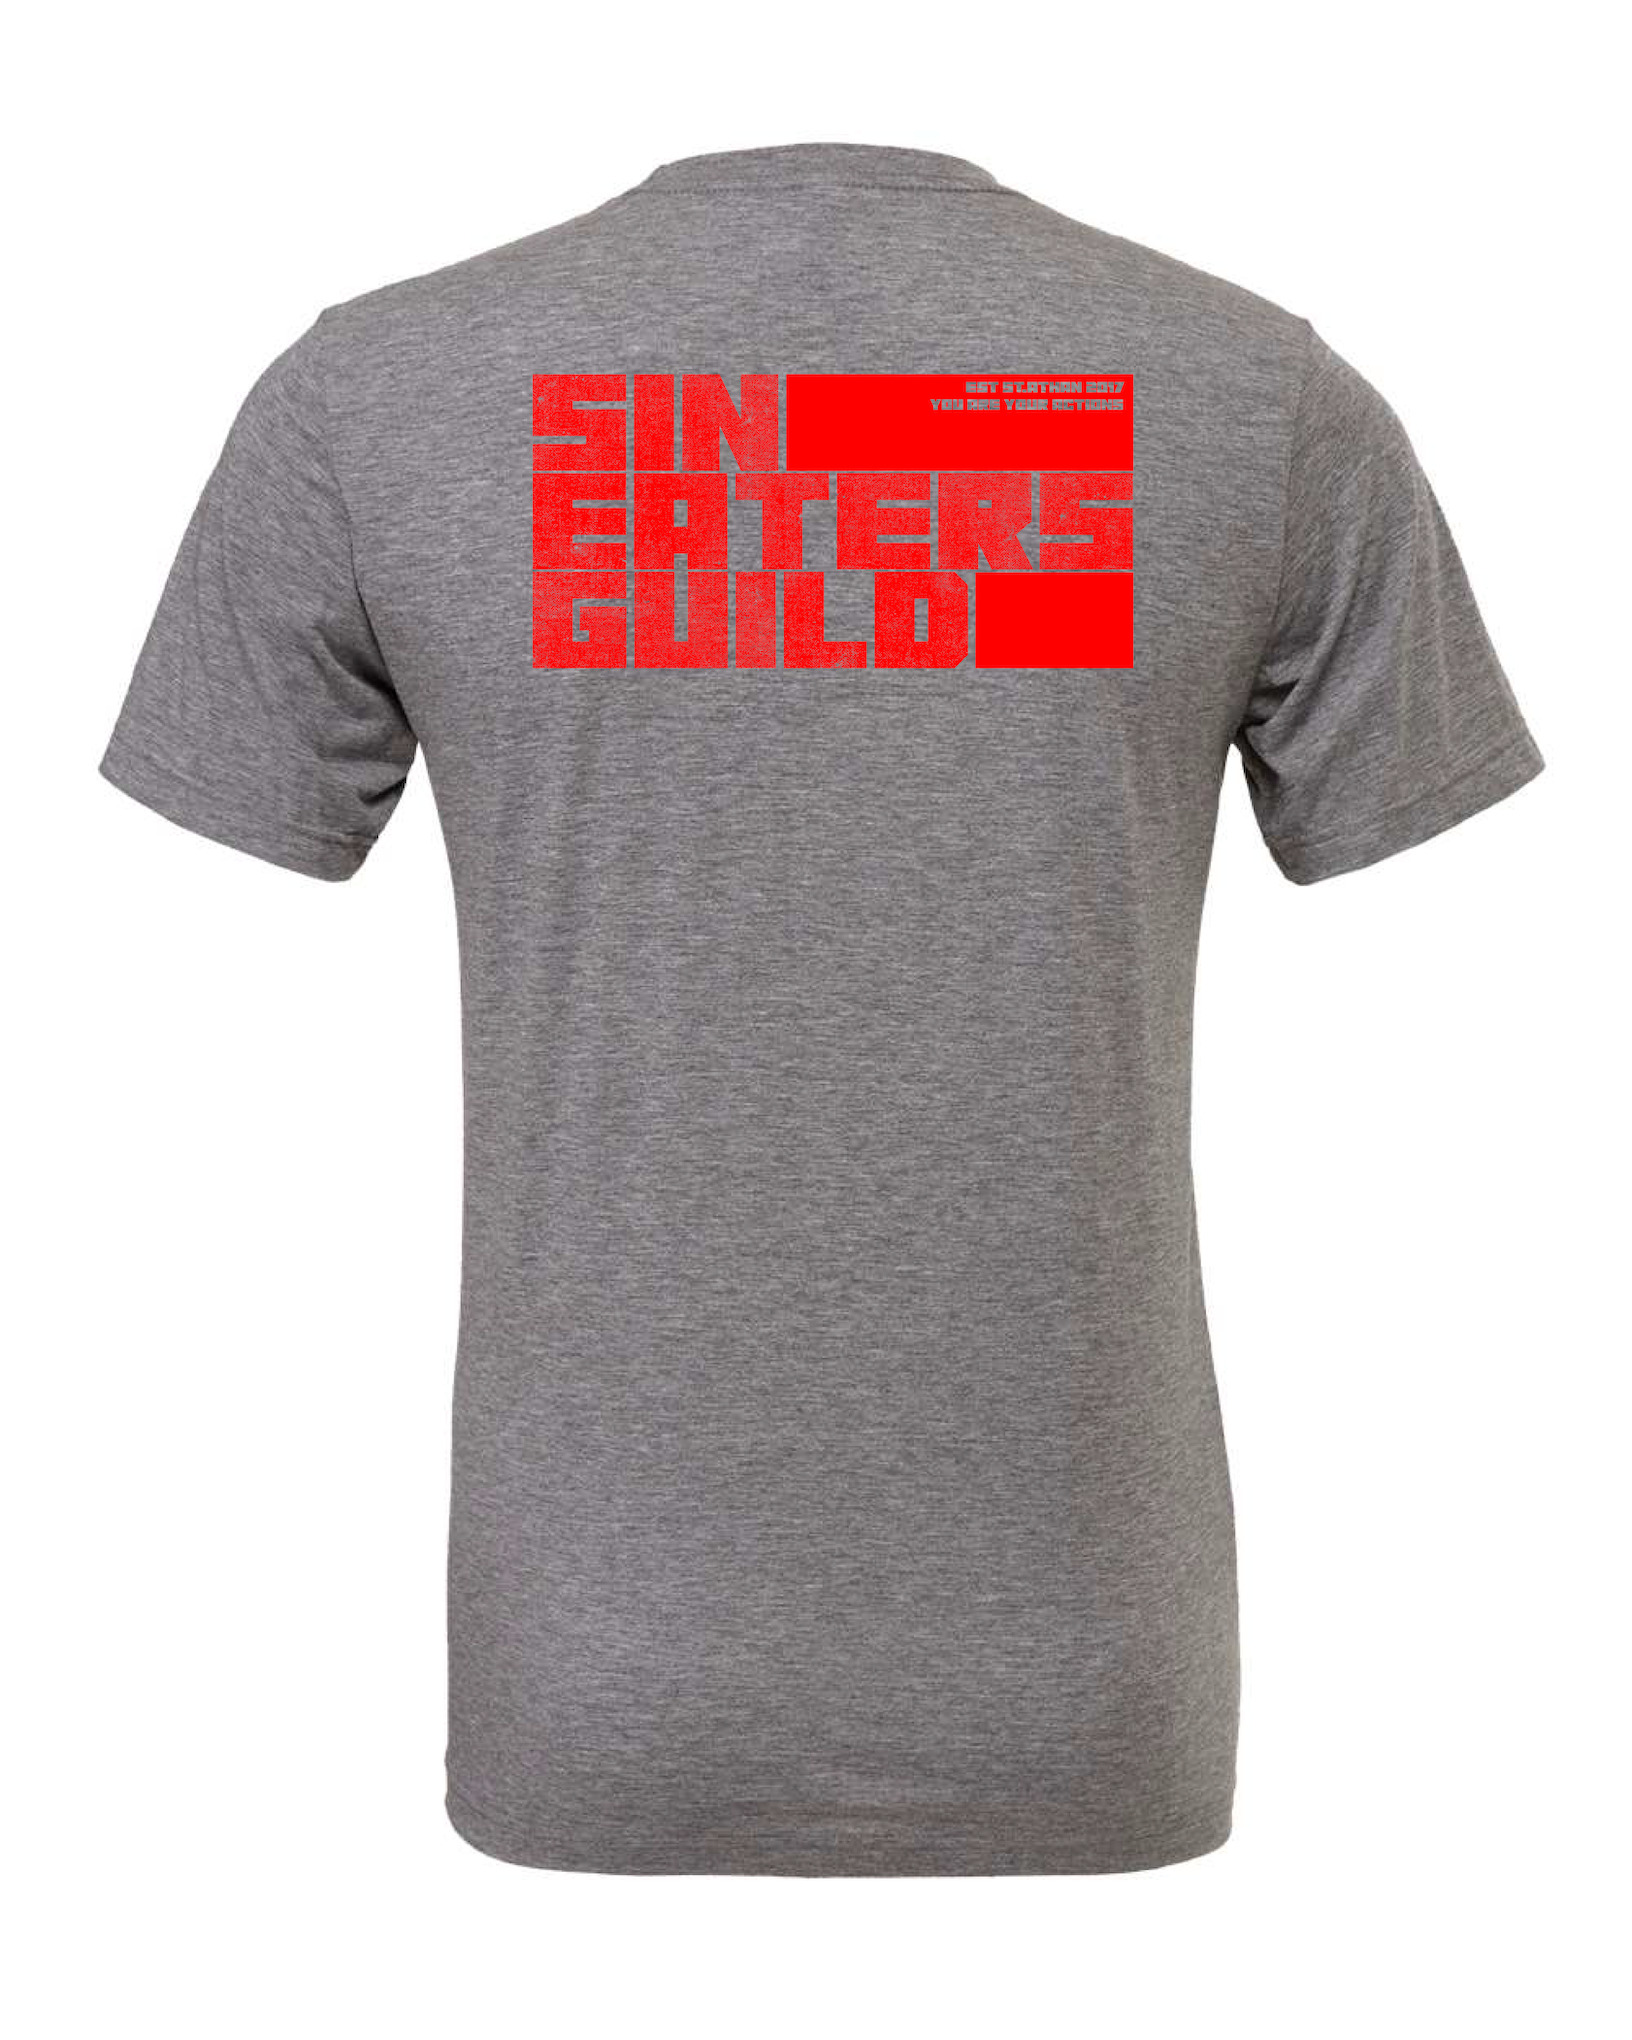 SEG Blocks T-Shirt - Red Print